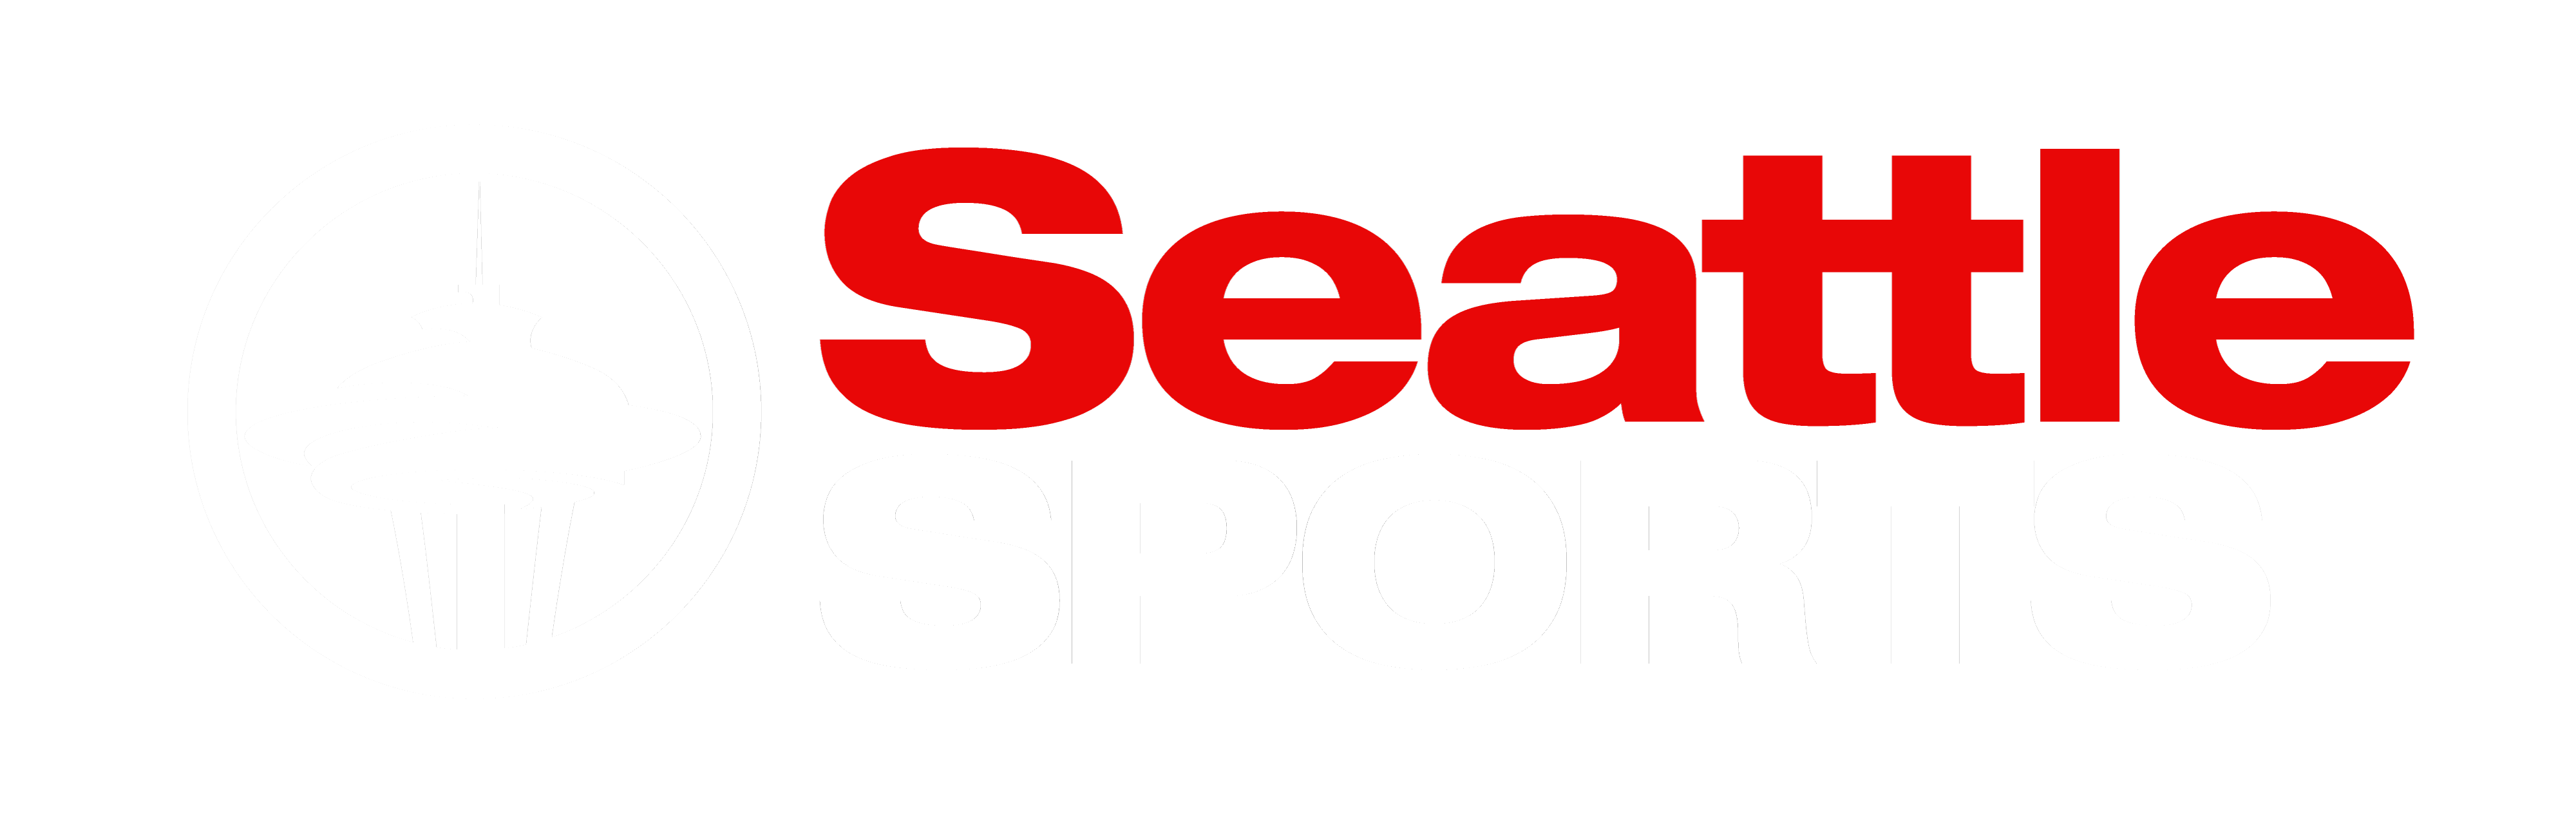 Seatle seahawks - Die preiswertesten Seatle seahawks im Vergleich!